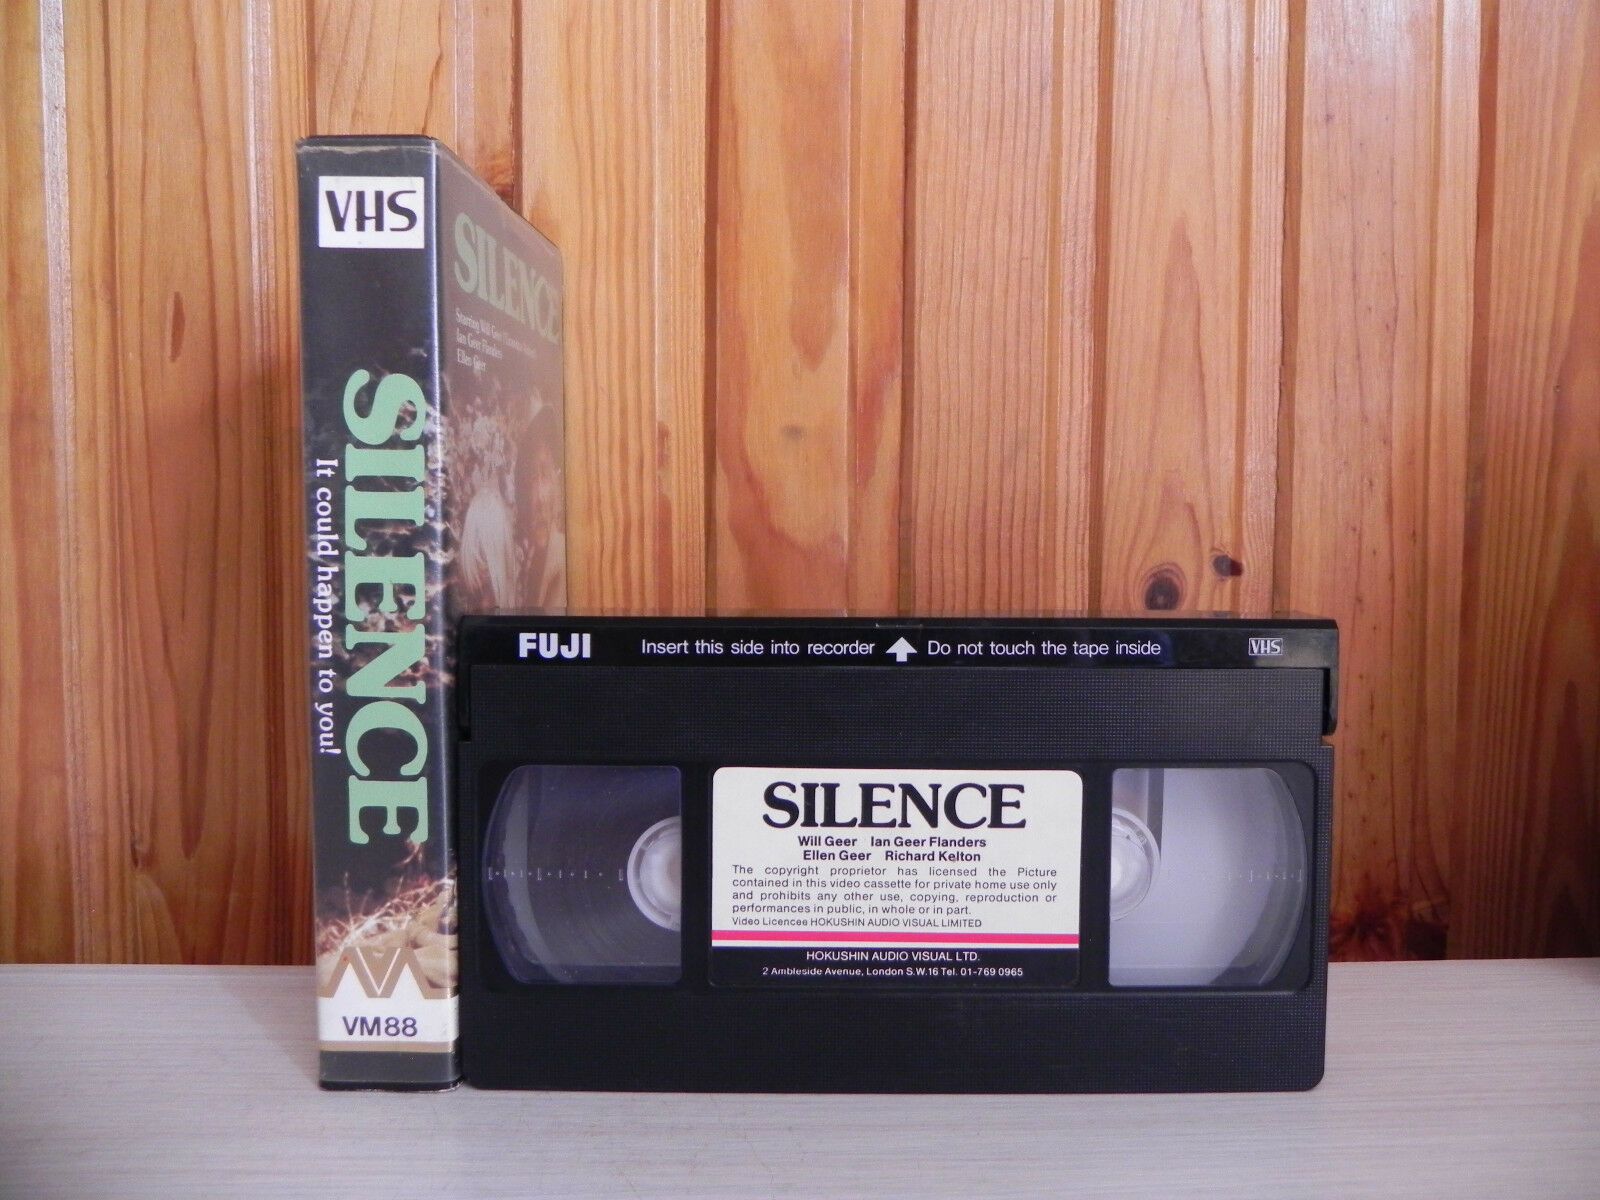 Silence - Ian Beer Flanders - Hokushin - Ex Rental - Big Box - Pre Cert VHS-